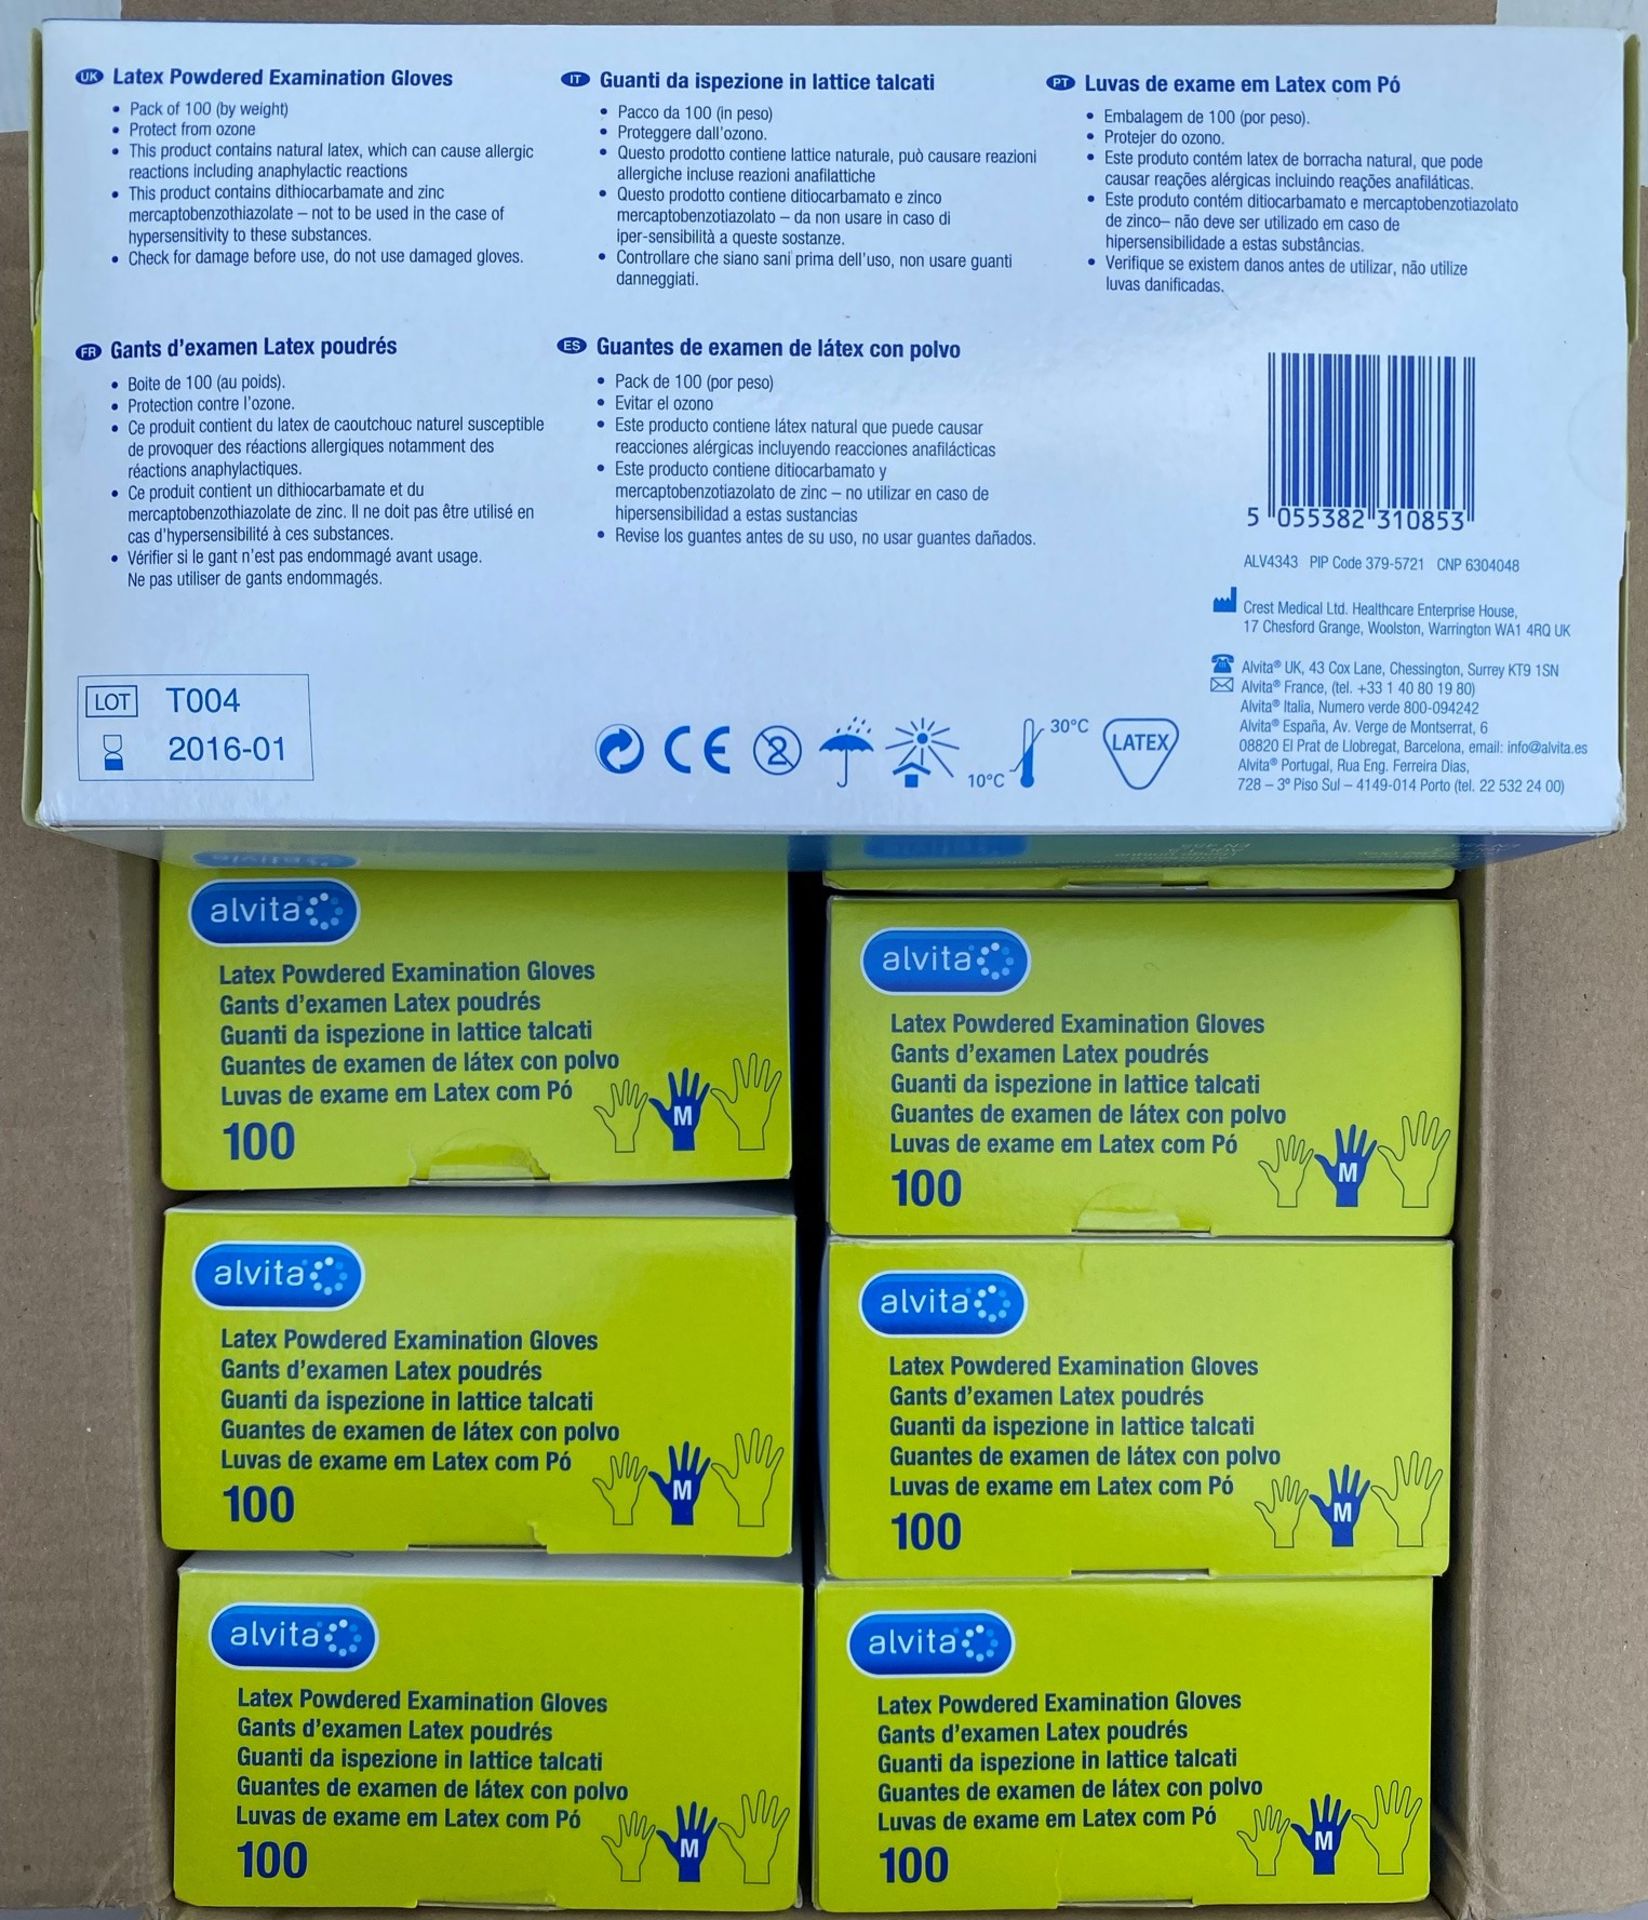 10 x boxes of 100 x Alvita Latex Powdered Examination Gloves - Size Medium - (1 outer box) - Image 2 of 2